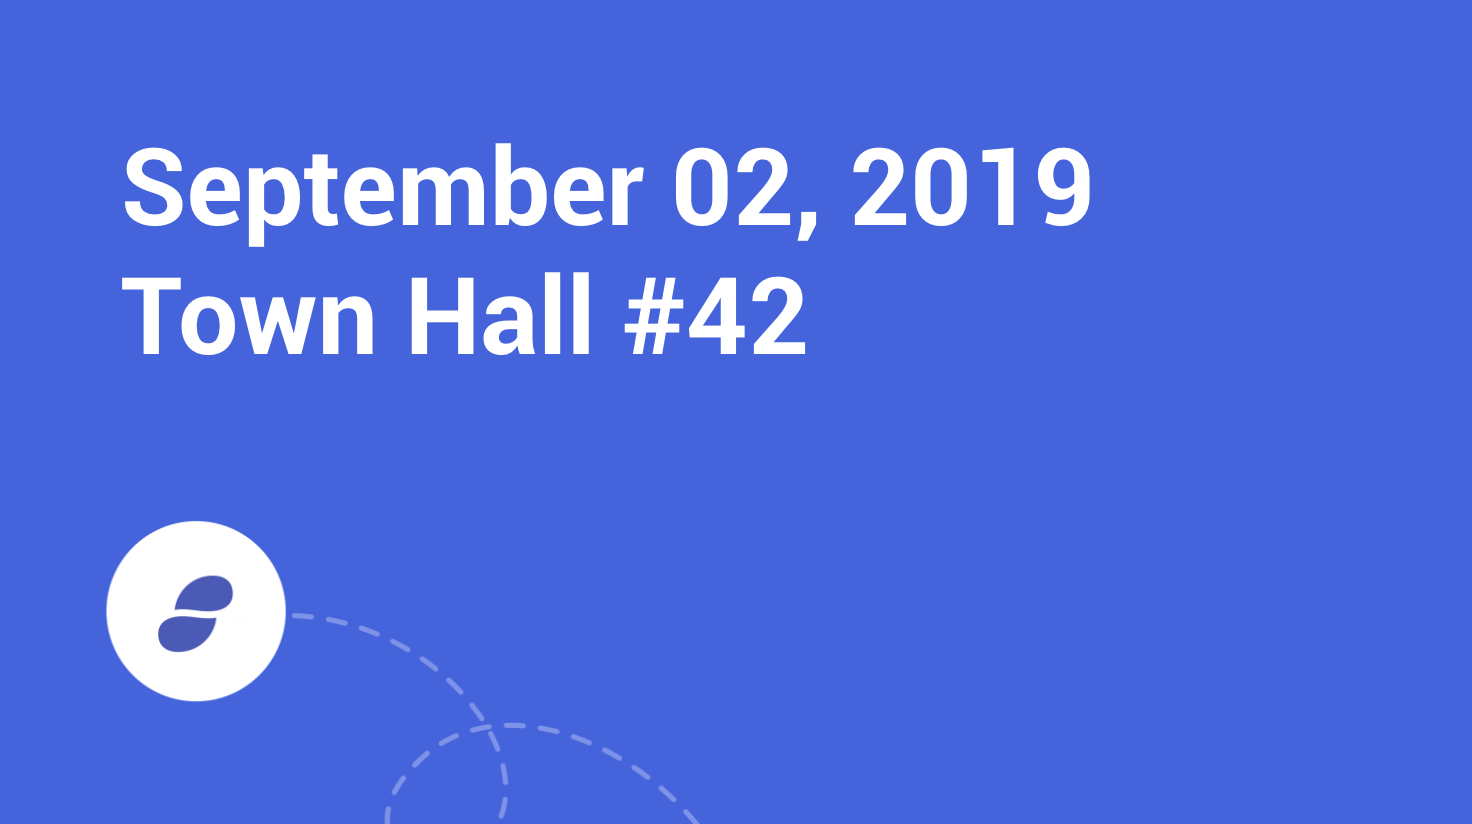 Town Hall #42 September 02, 2019